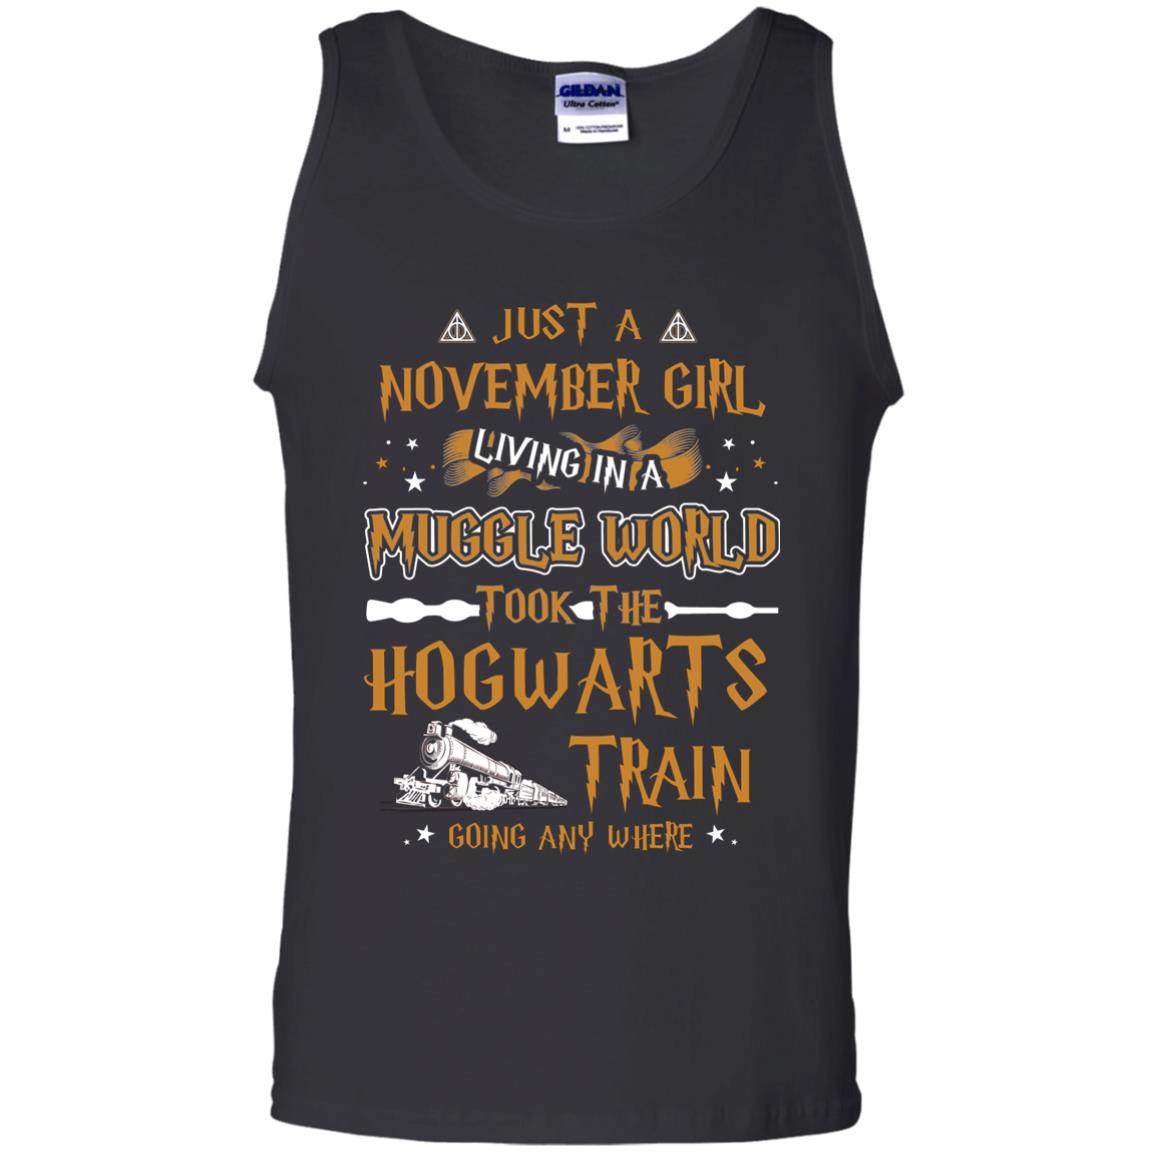 Just A November Girl Living In A Muggle World Took The Hogwarts Train Going Any WhereG220 Gildan 100% Cotton Tank Top